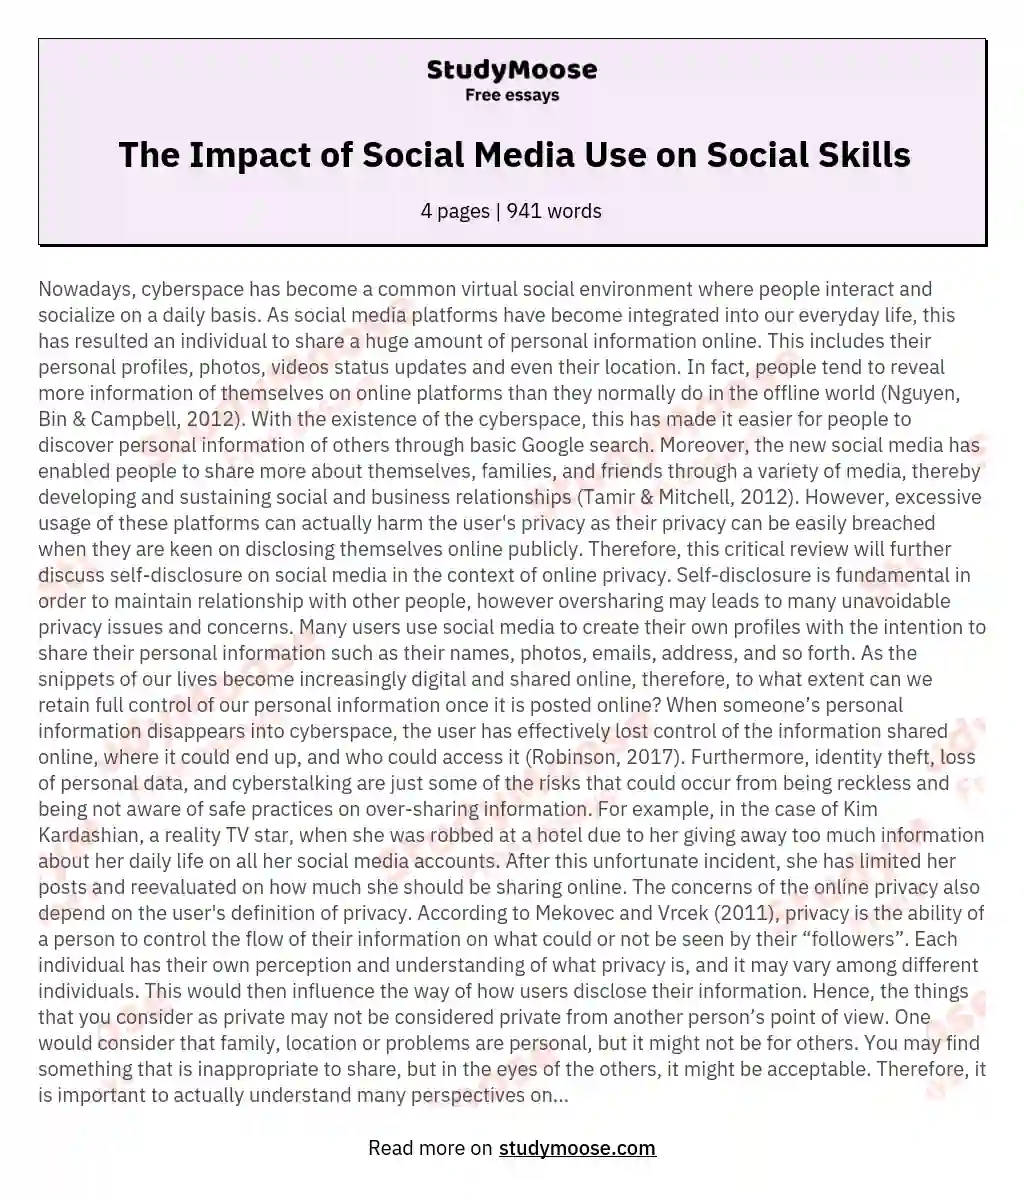 The Impact of Social Media Use on Social Skills